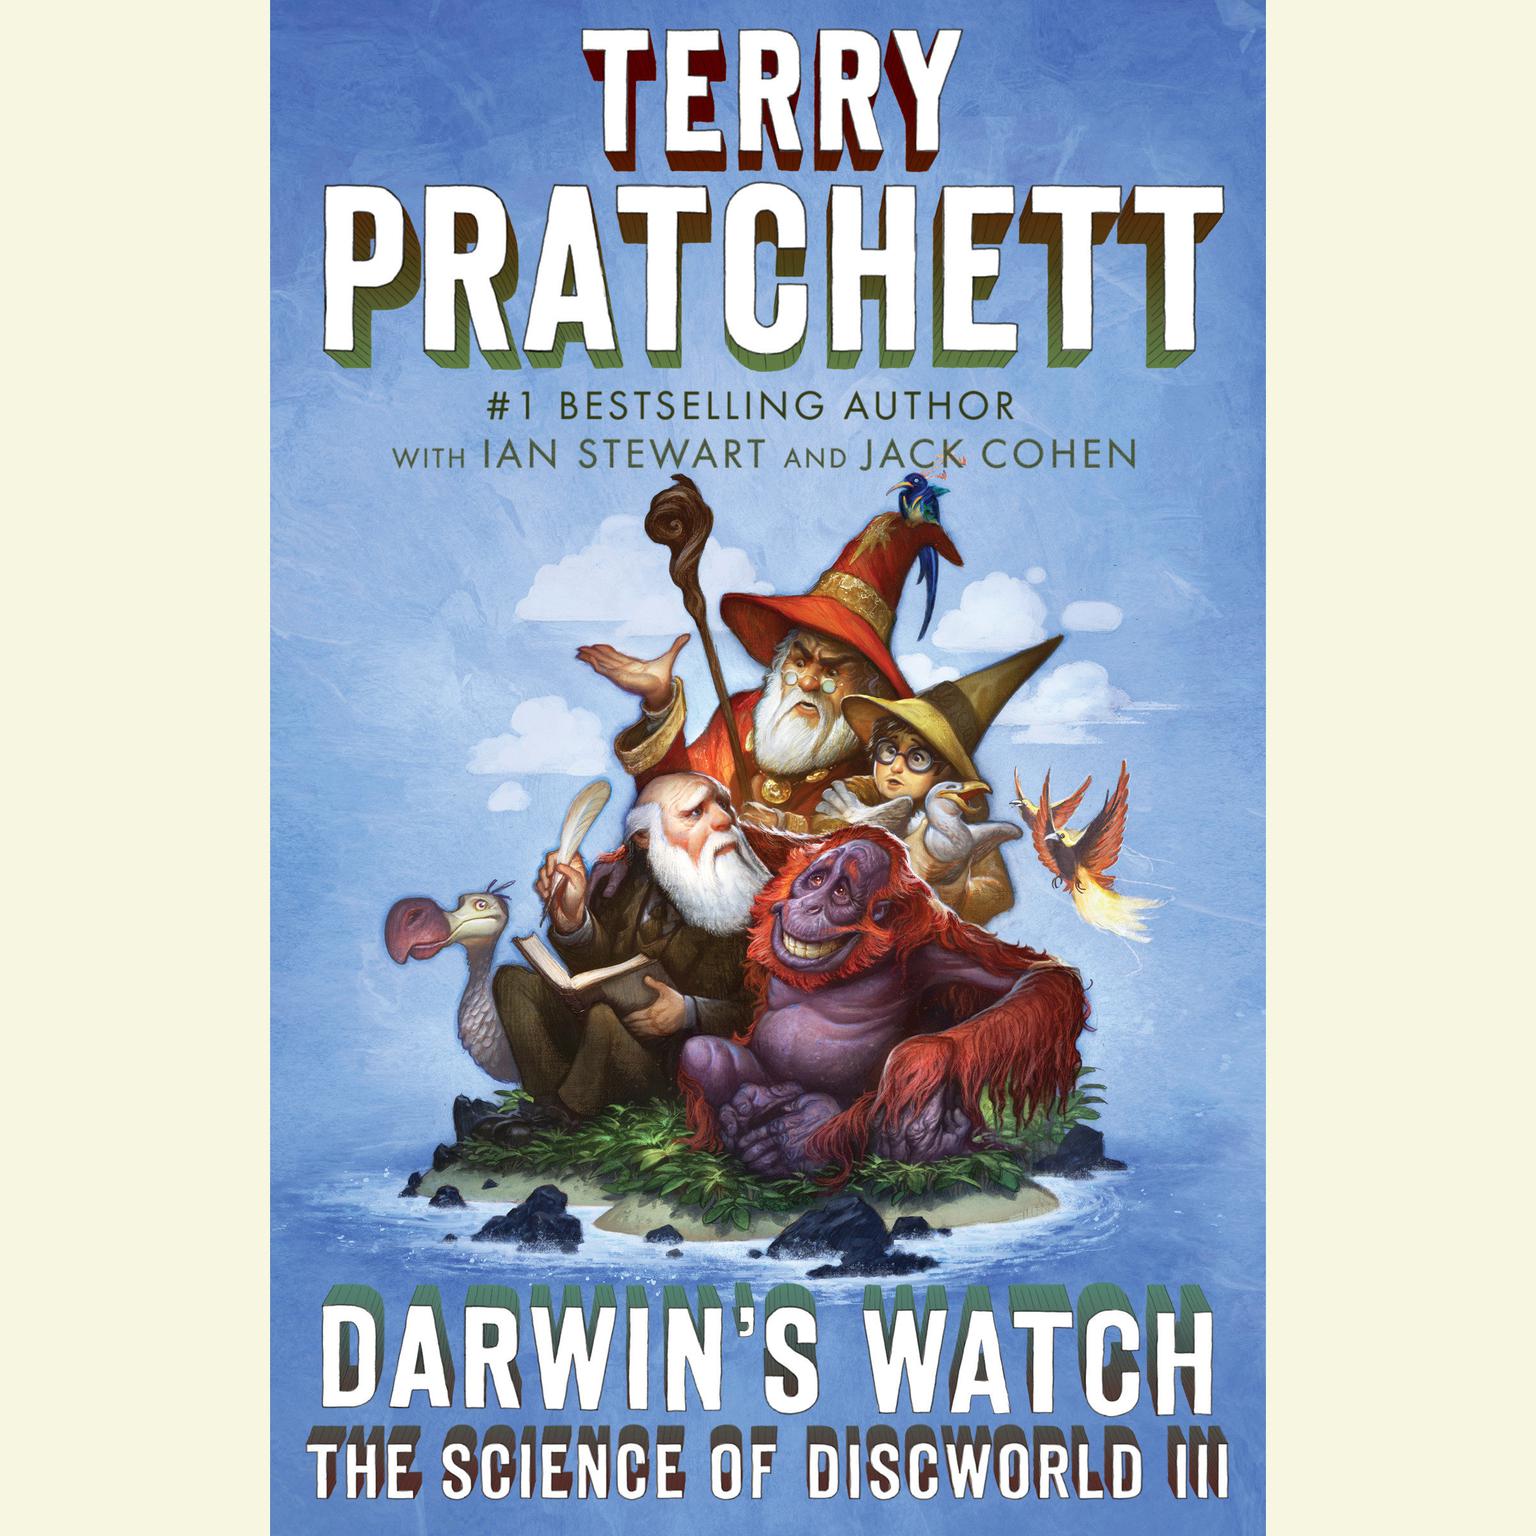 Darwins Watch: The Science of Discworld III: A Novel Audiobook, by Terry Pratchett